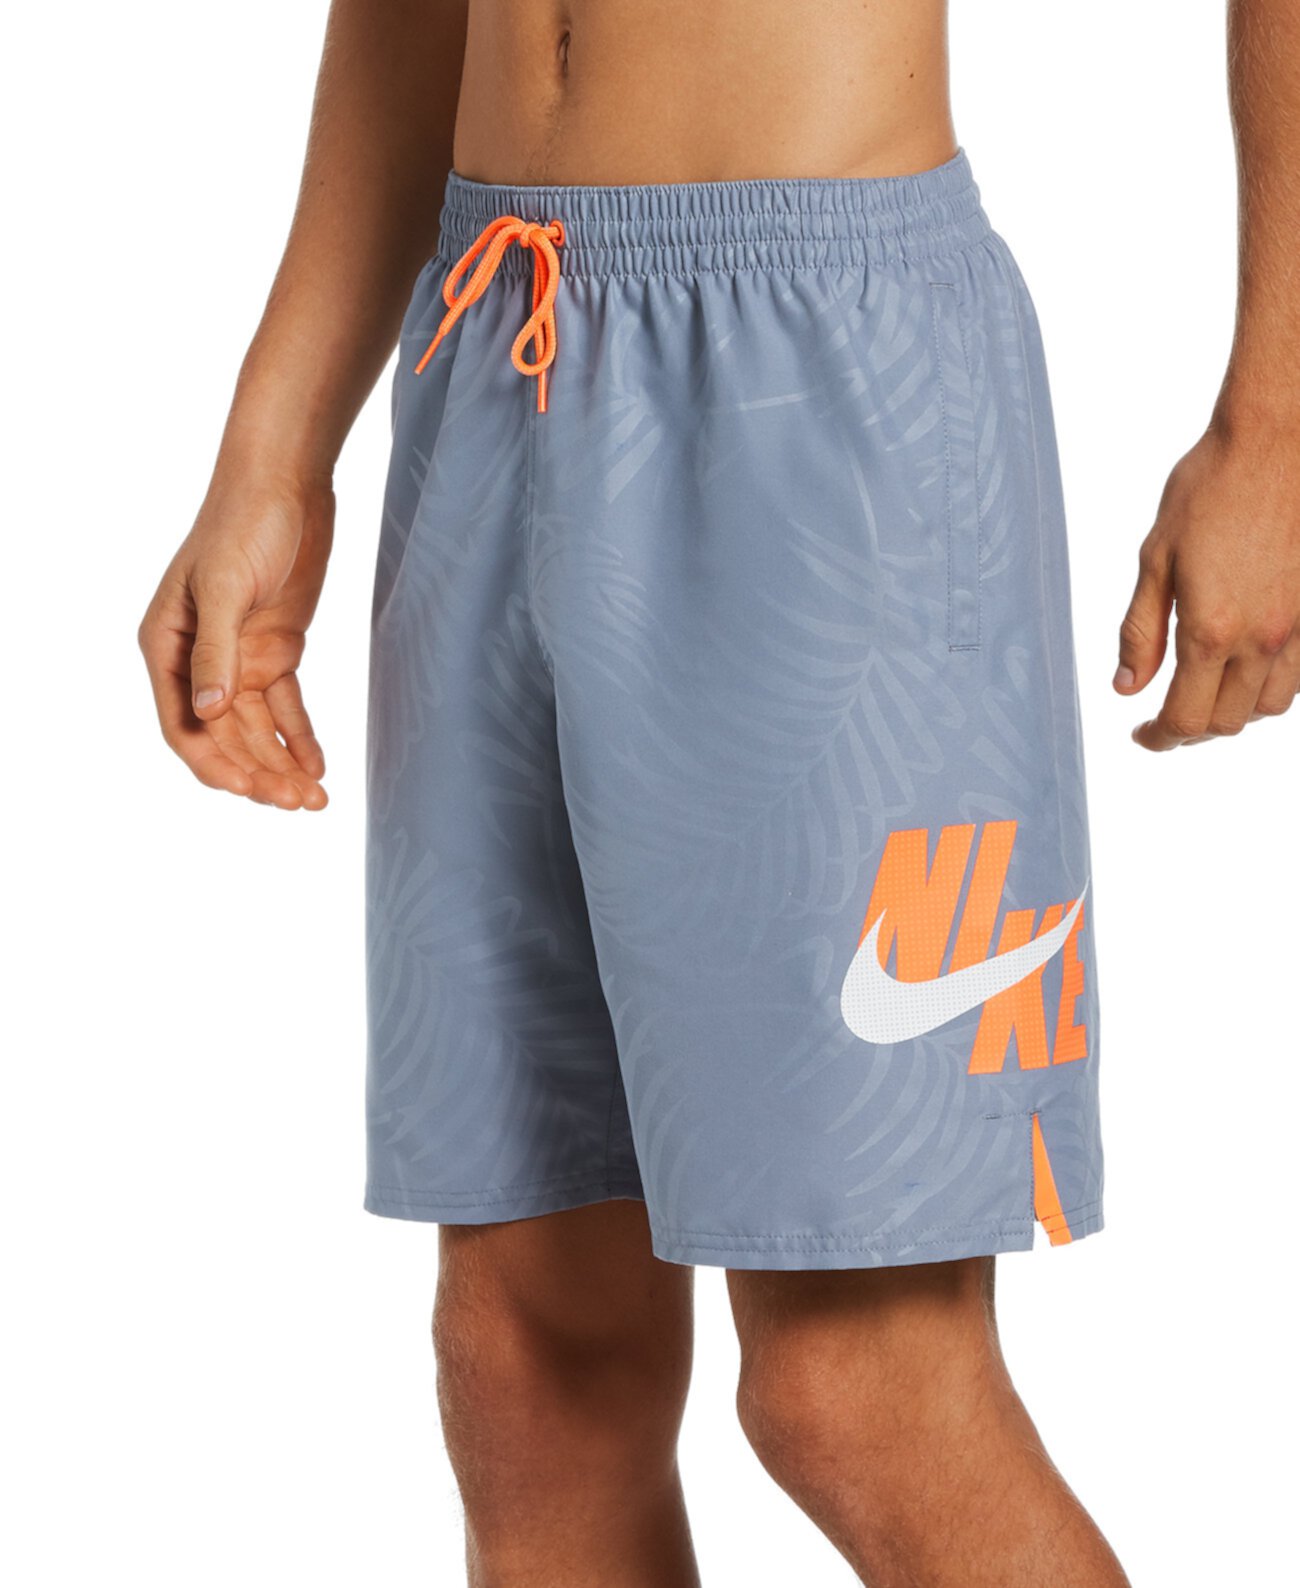 Мужские шорты для волейбола 9 дюймов Big & Tall Palm Nike